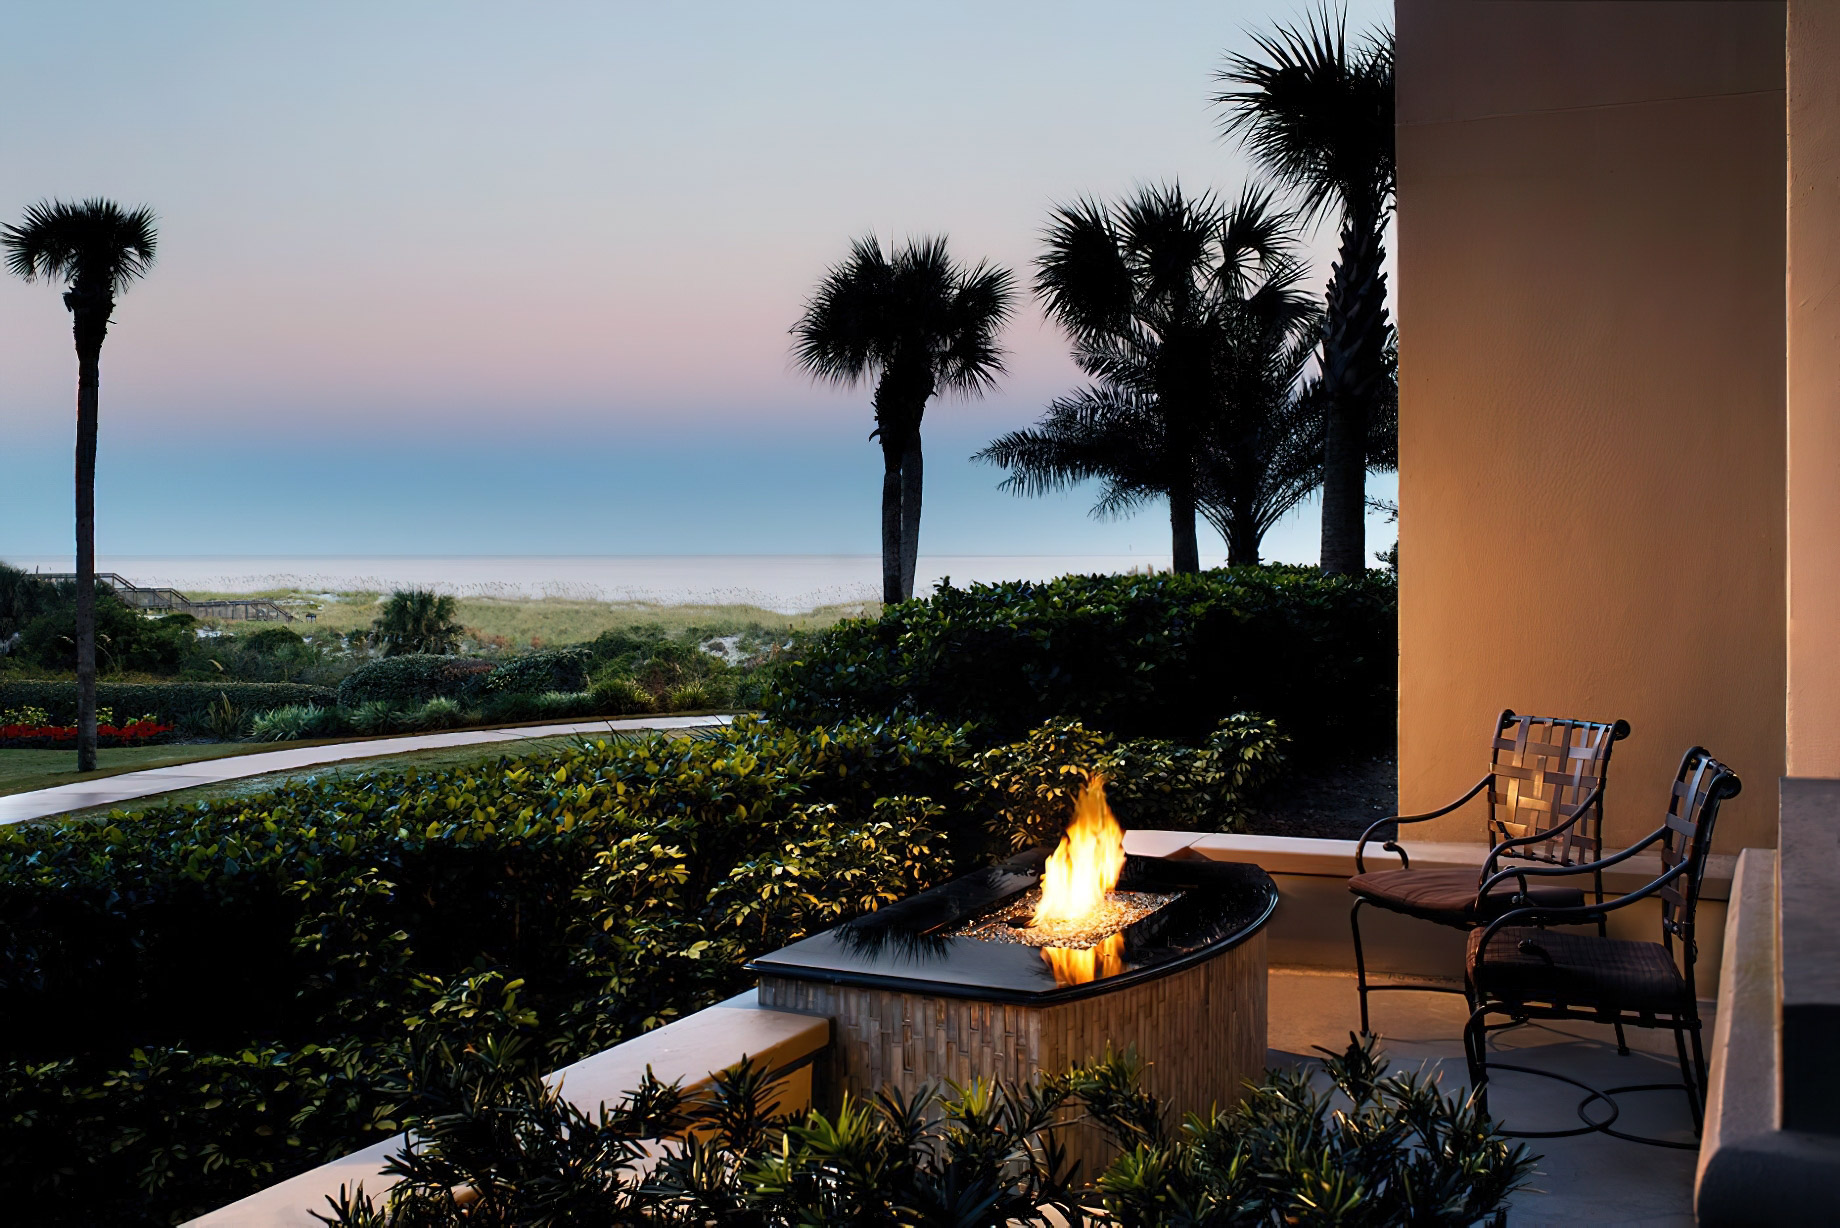 The Ritz-Carlton, Amelia Island Resort - Fernandina Beach, FL, USA - Coastal Firetable Room